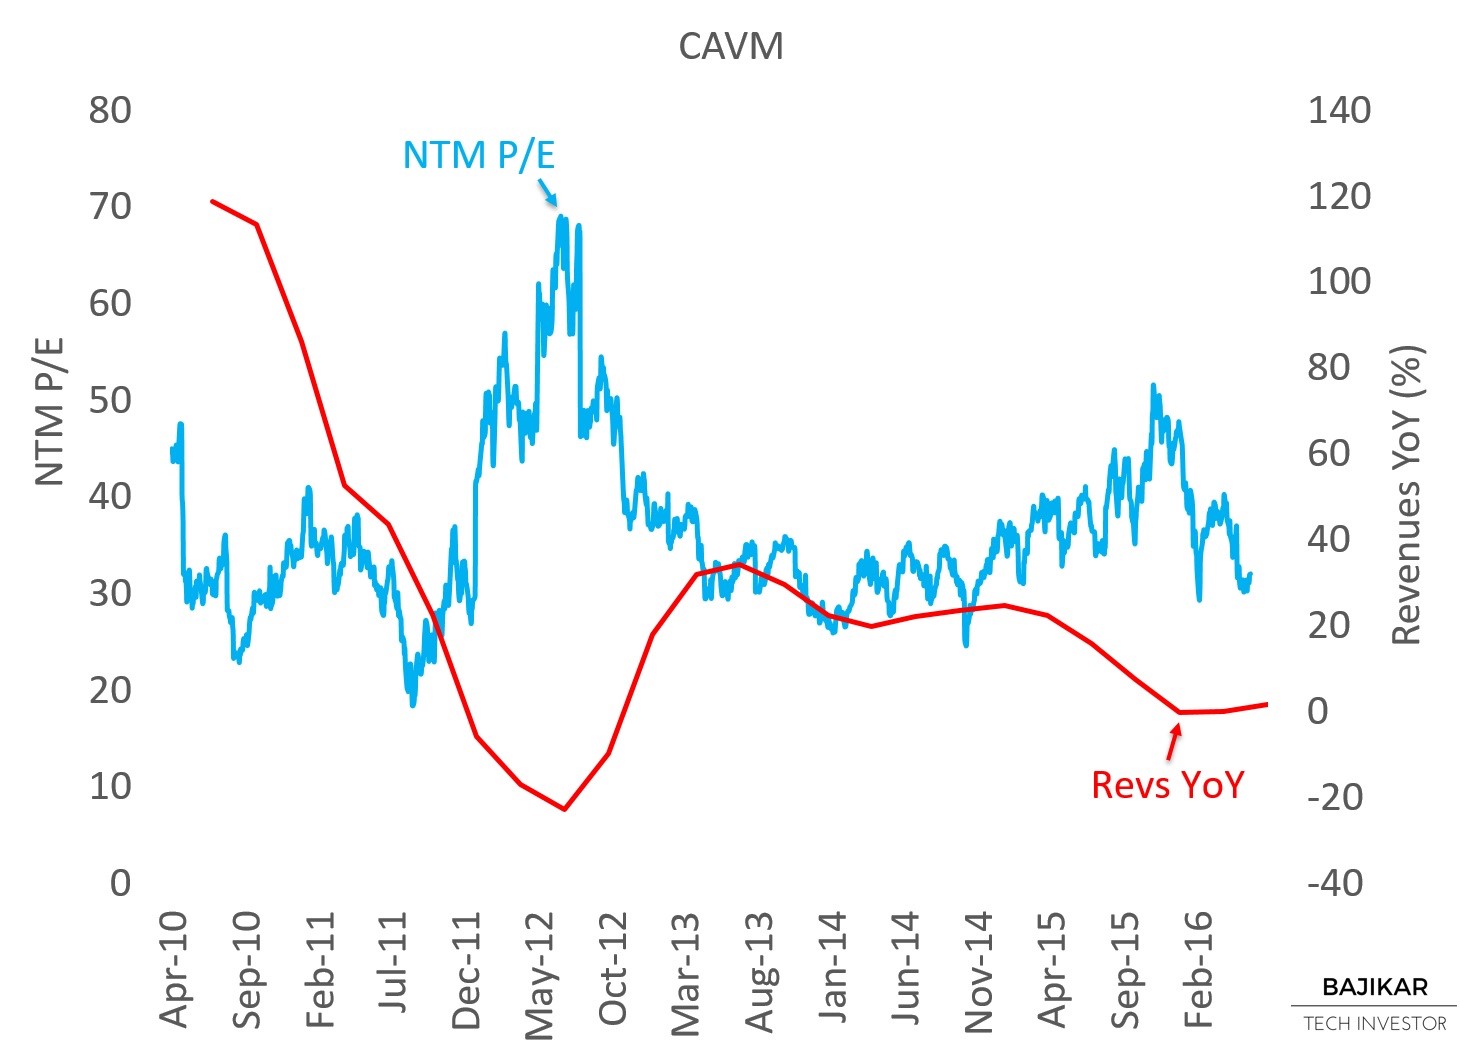 CAVM NTM P/E vs. YoY Revenues